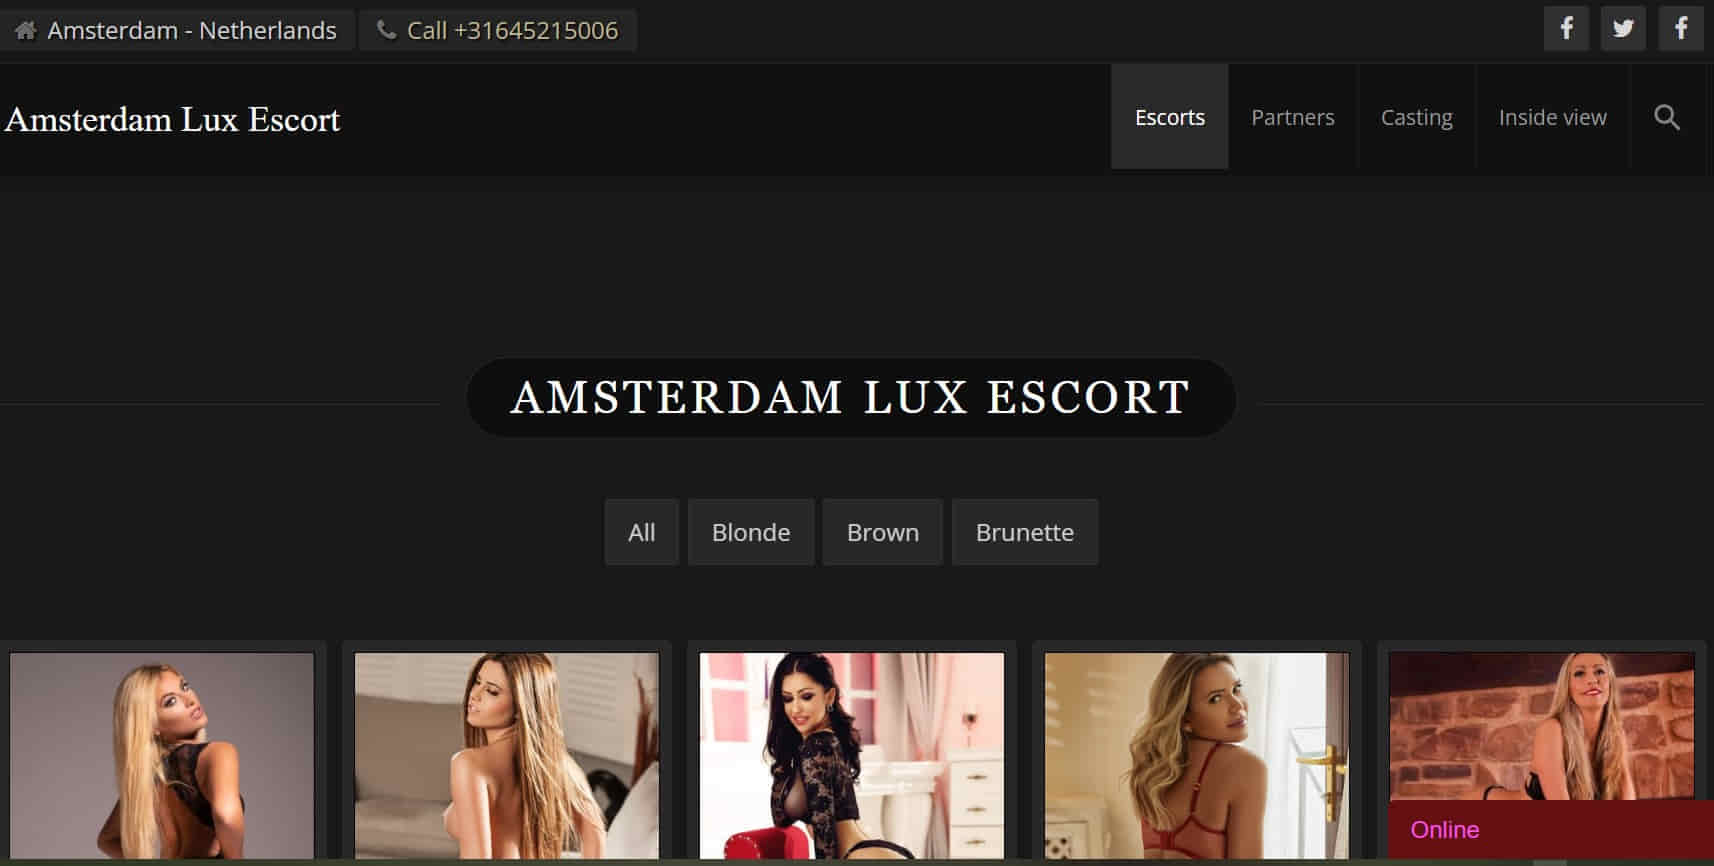 Amsterdam Lux Escort